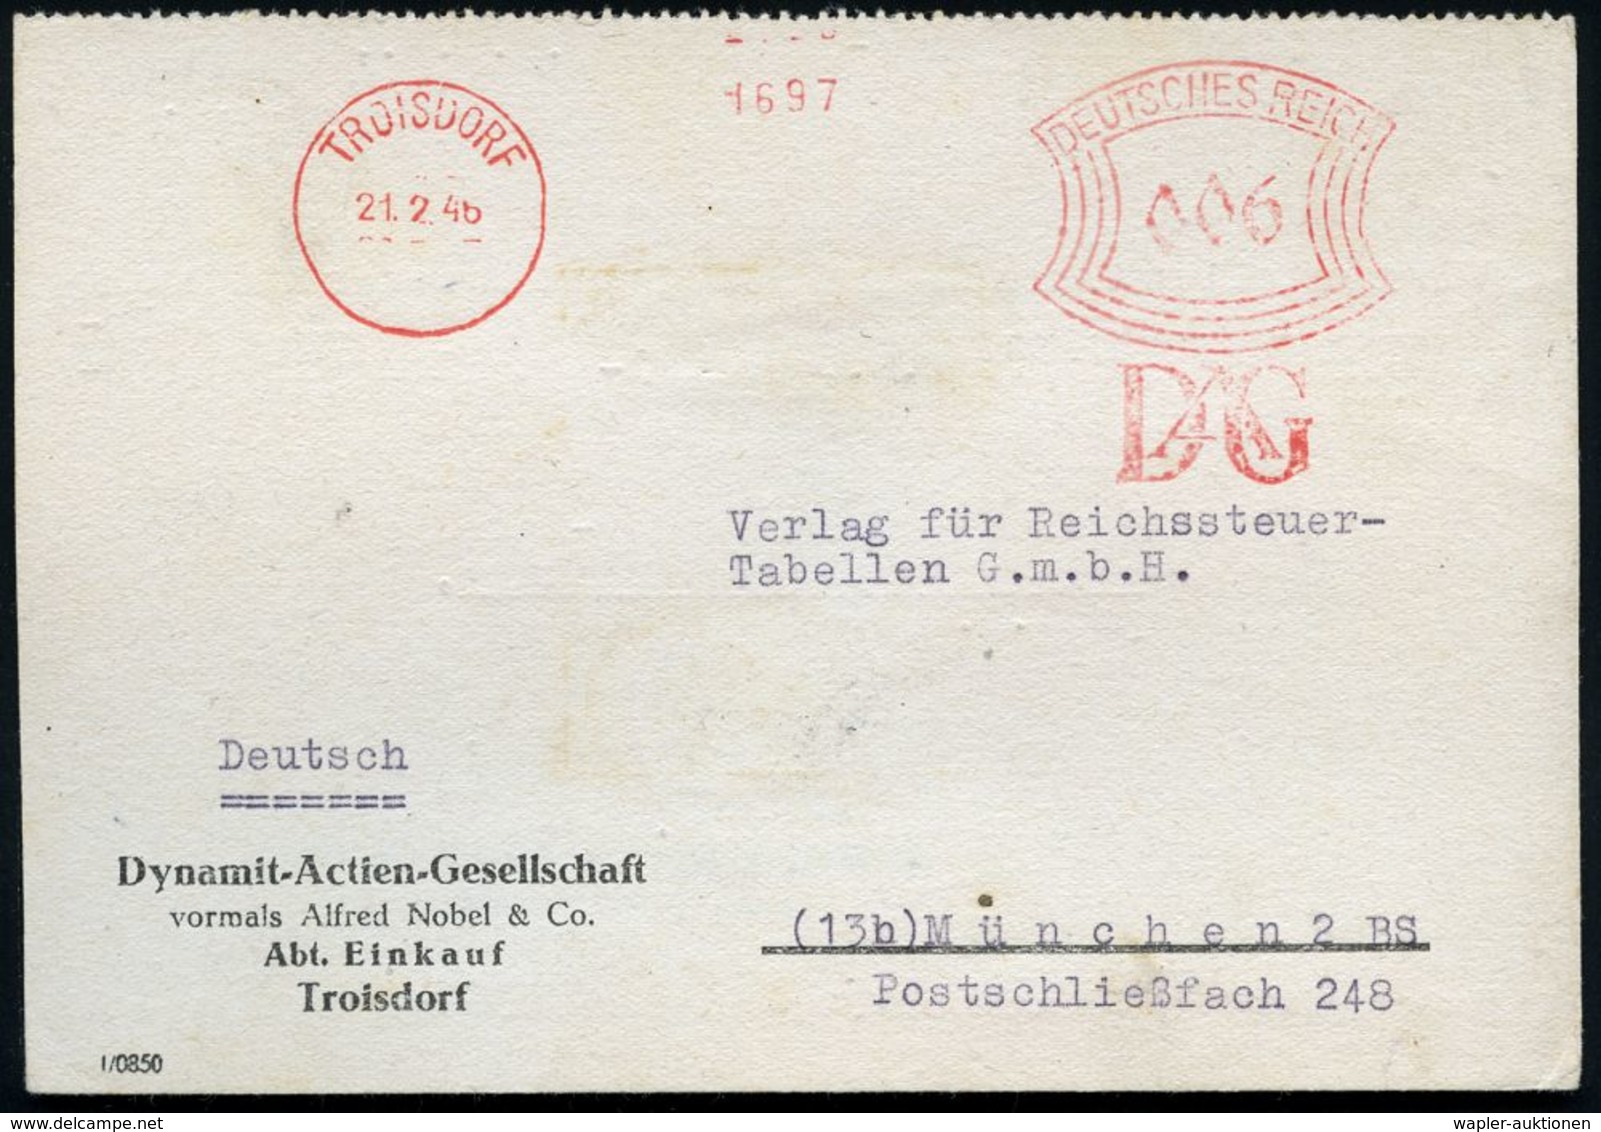 NOBELPREIS / NOBELPREISTRÄGER : TROISDORF/ DAG 1946 (21.2.) Seltener, Unverändert Weiterverwendeter AFS "Bogenrechteck"  - Nobel Prize Laureates